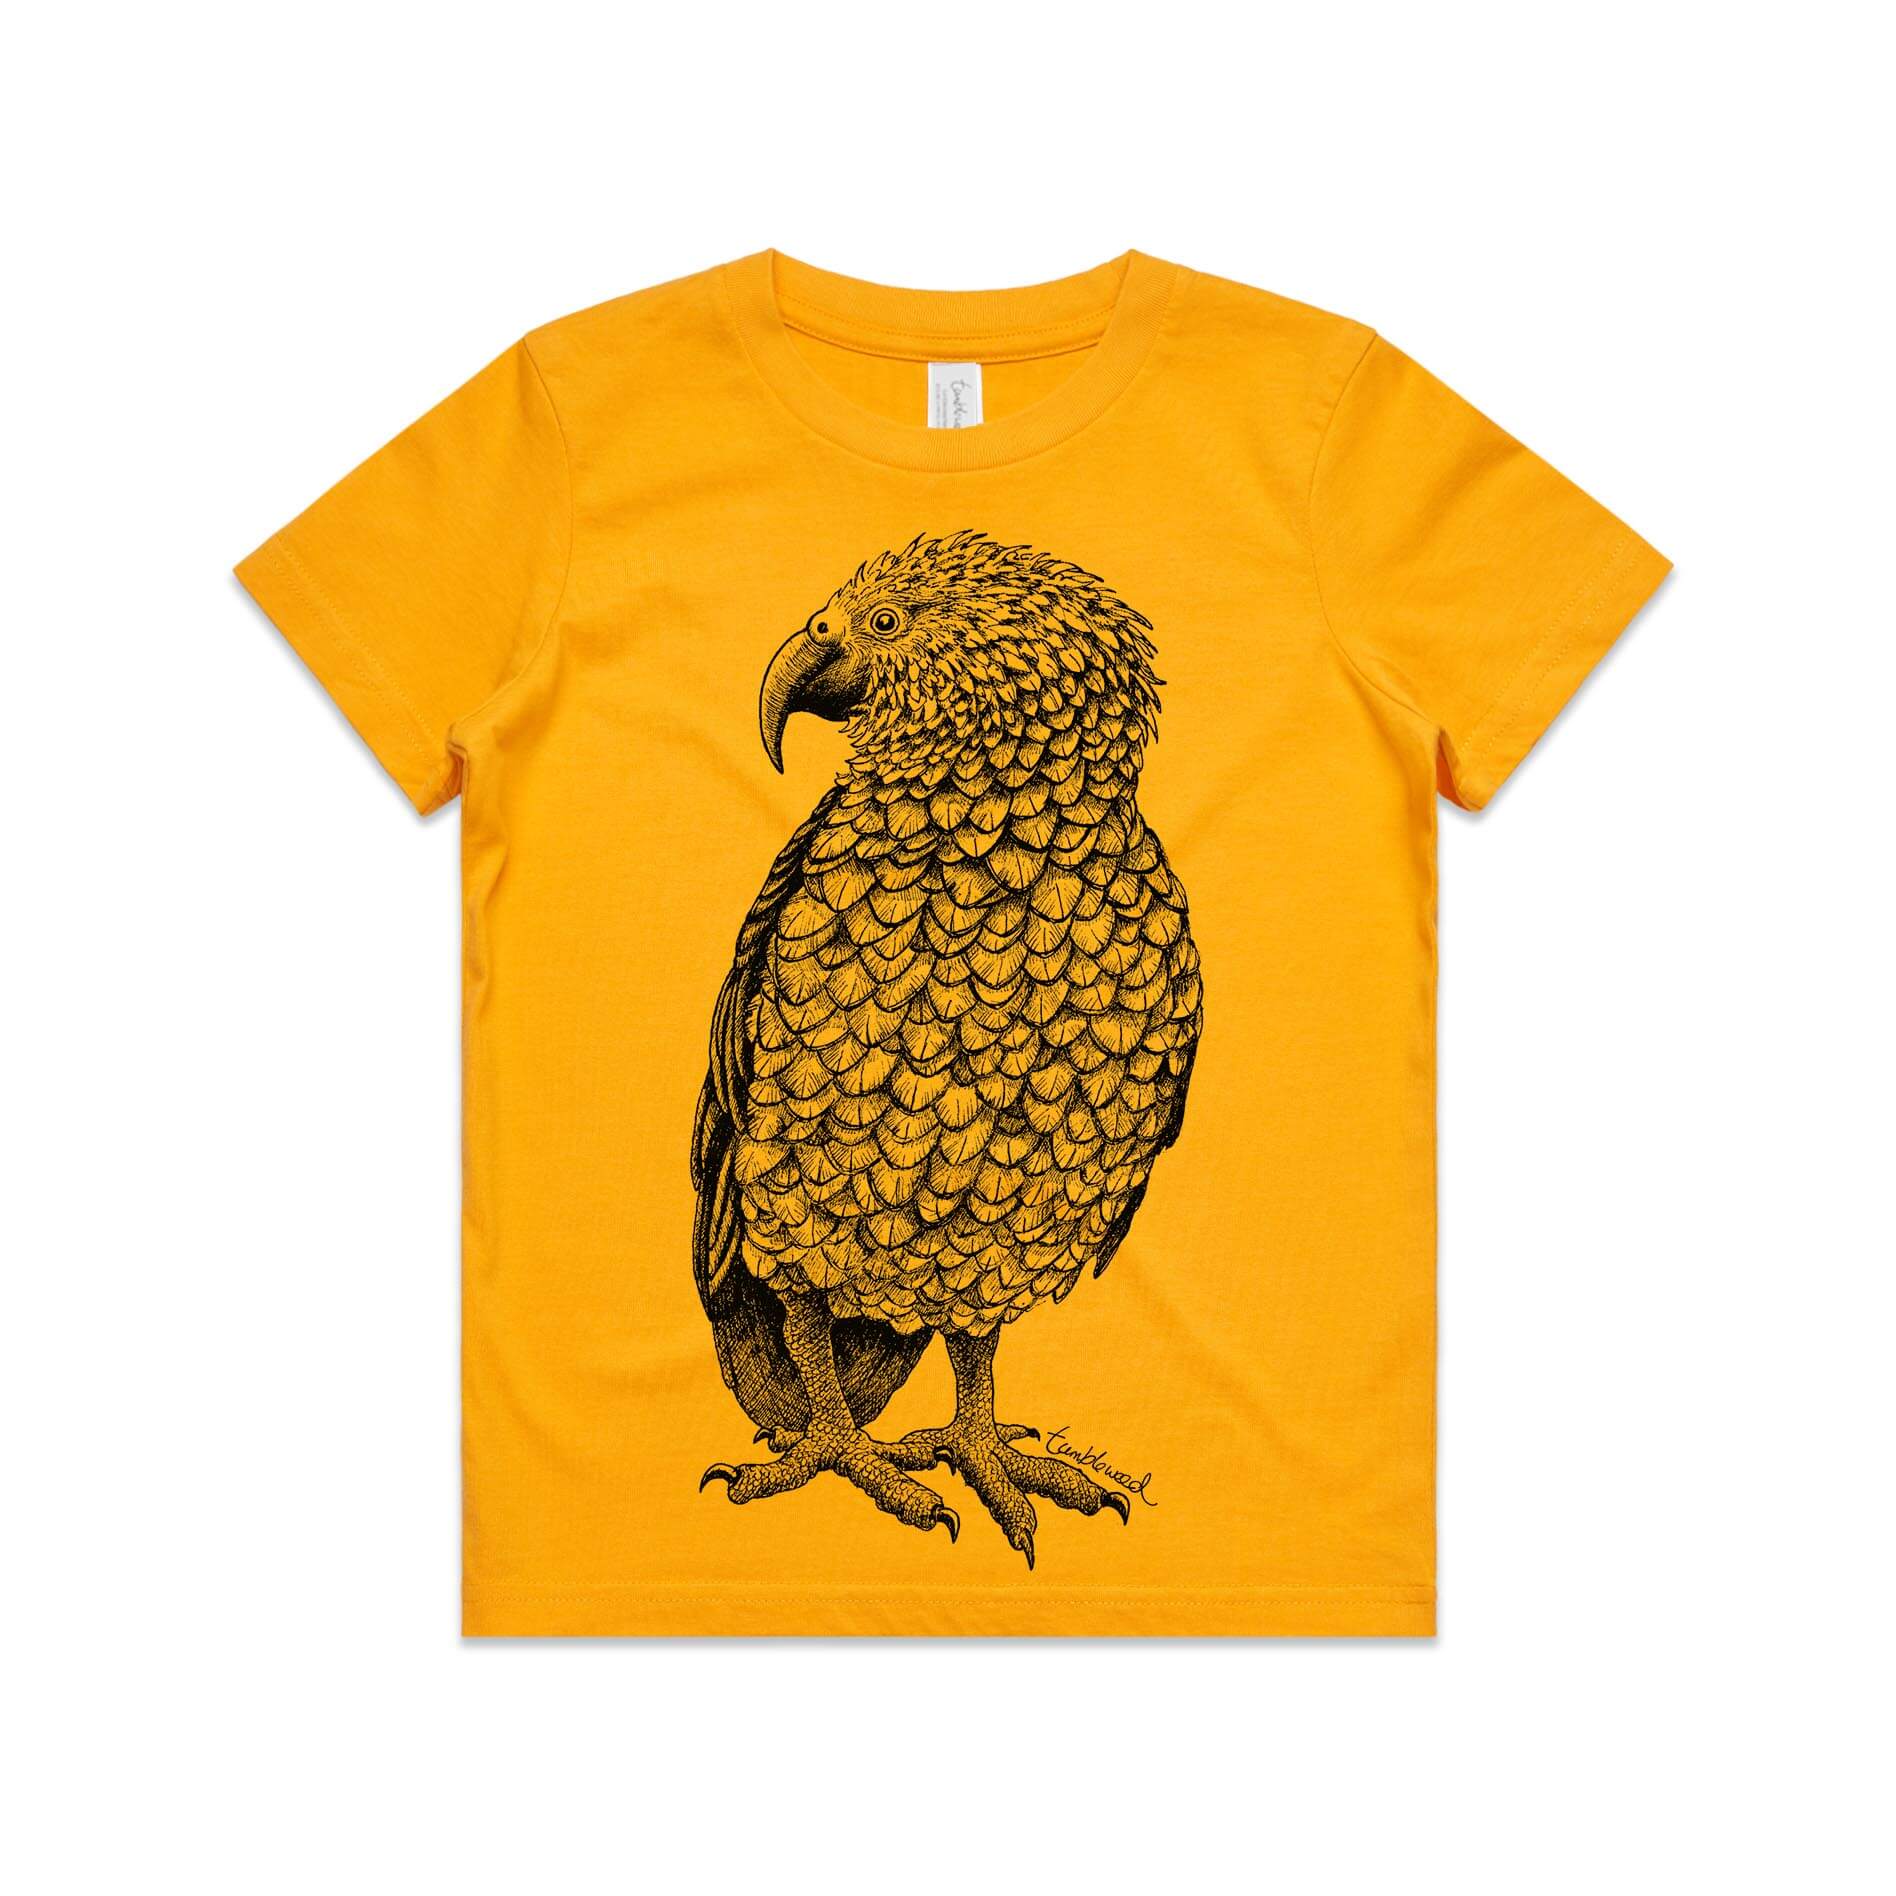 Gold, cotton kids' t-shirt with screen printed Kids kea design.